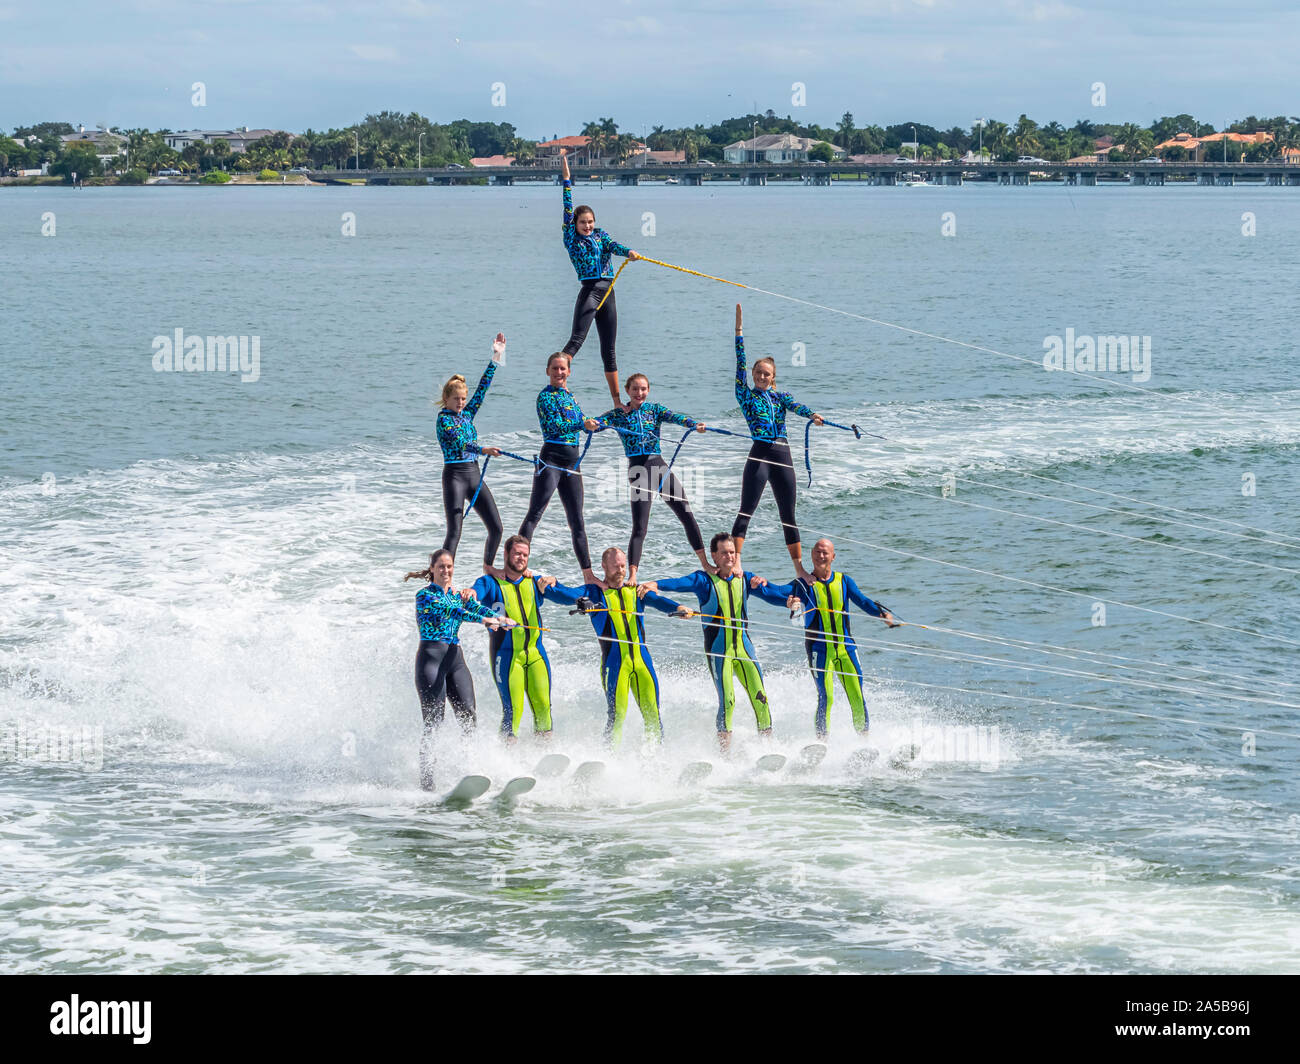 The Sarasota Ski-A-Rees Water Ski team preforming in Sarasota Bay in Sarasota Florida Stock Photo